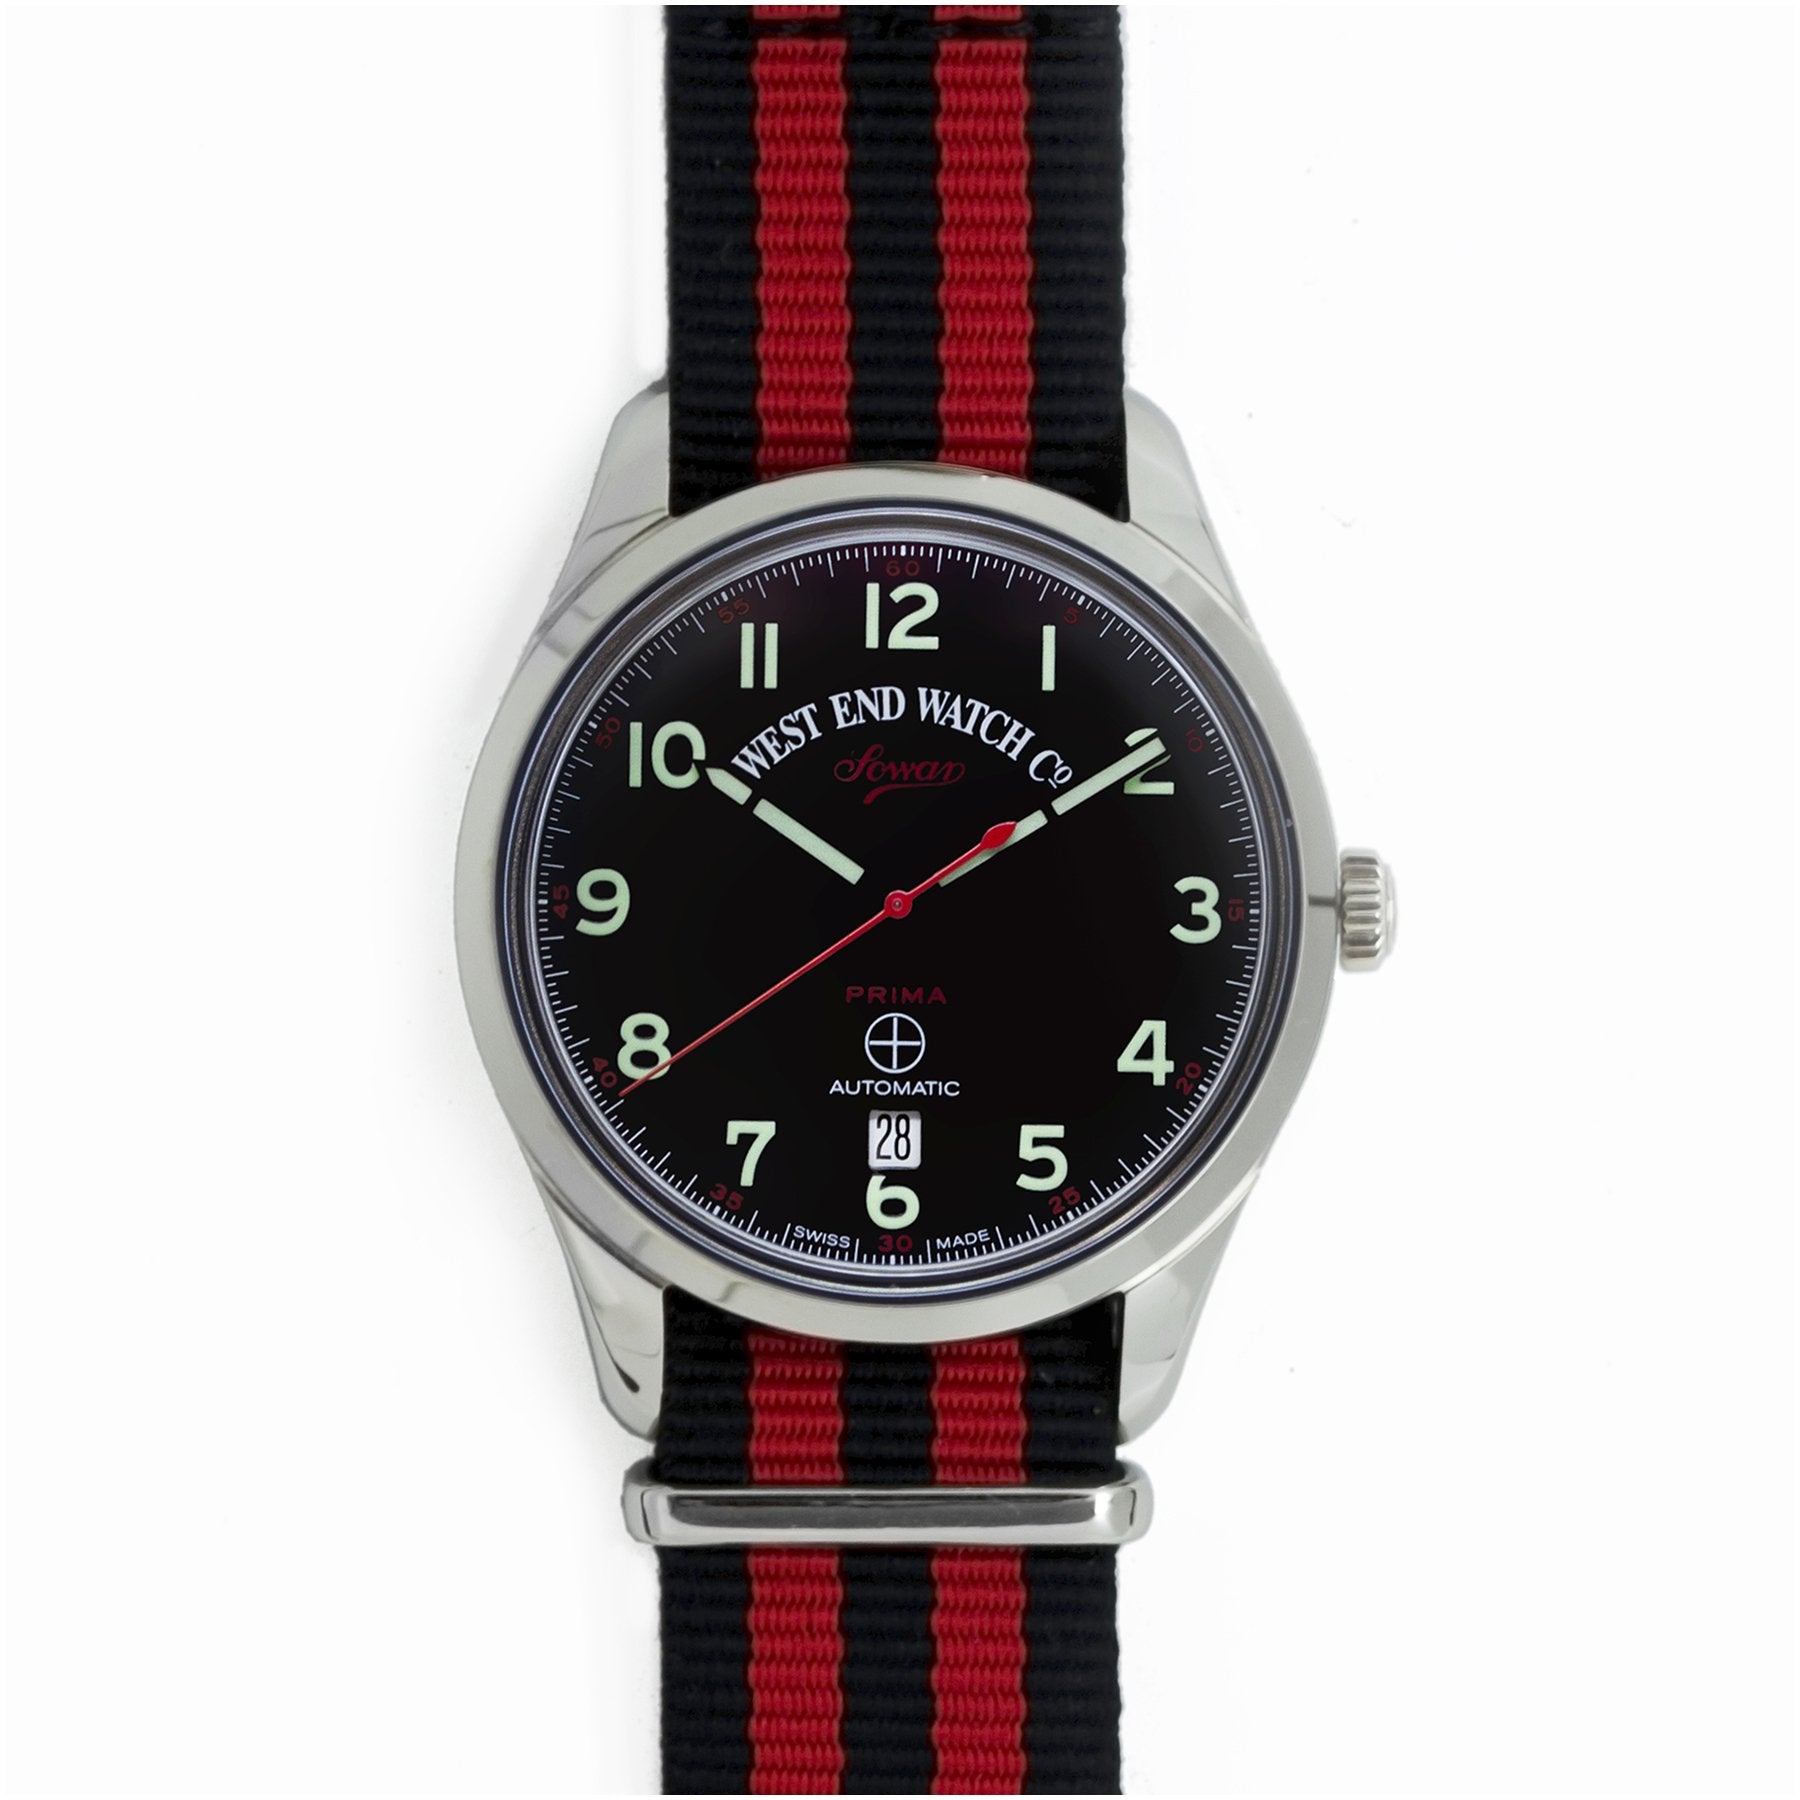 West End Watch Co., Sowar Prima Black Dial, Analog Watch, Droz family,